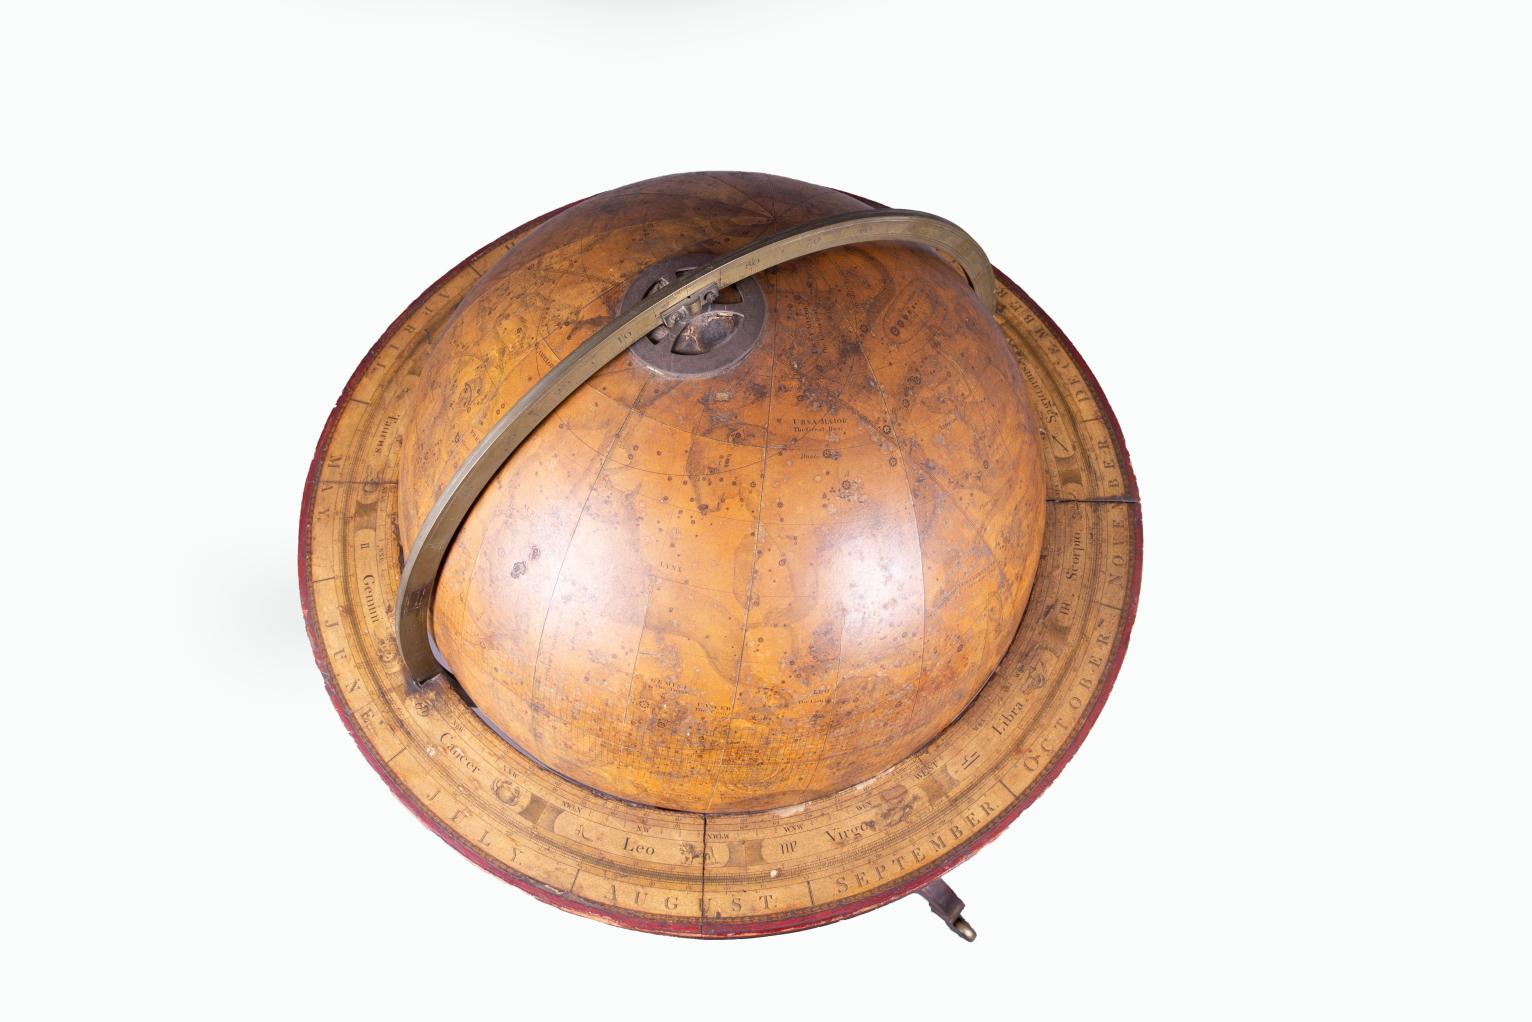 Late 18th century celestial globe on a mahogany tripod stand with brass castors by Nevil Maskelyne DD, FRS.   Sold by WS Jones, Holborn London.